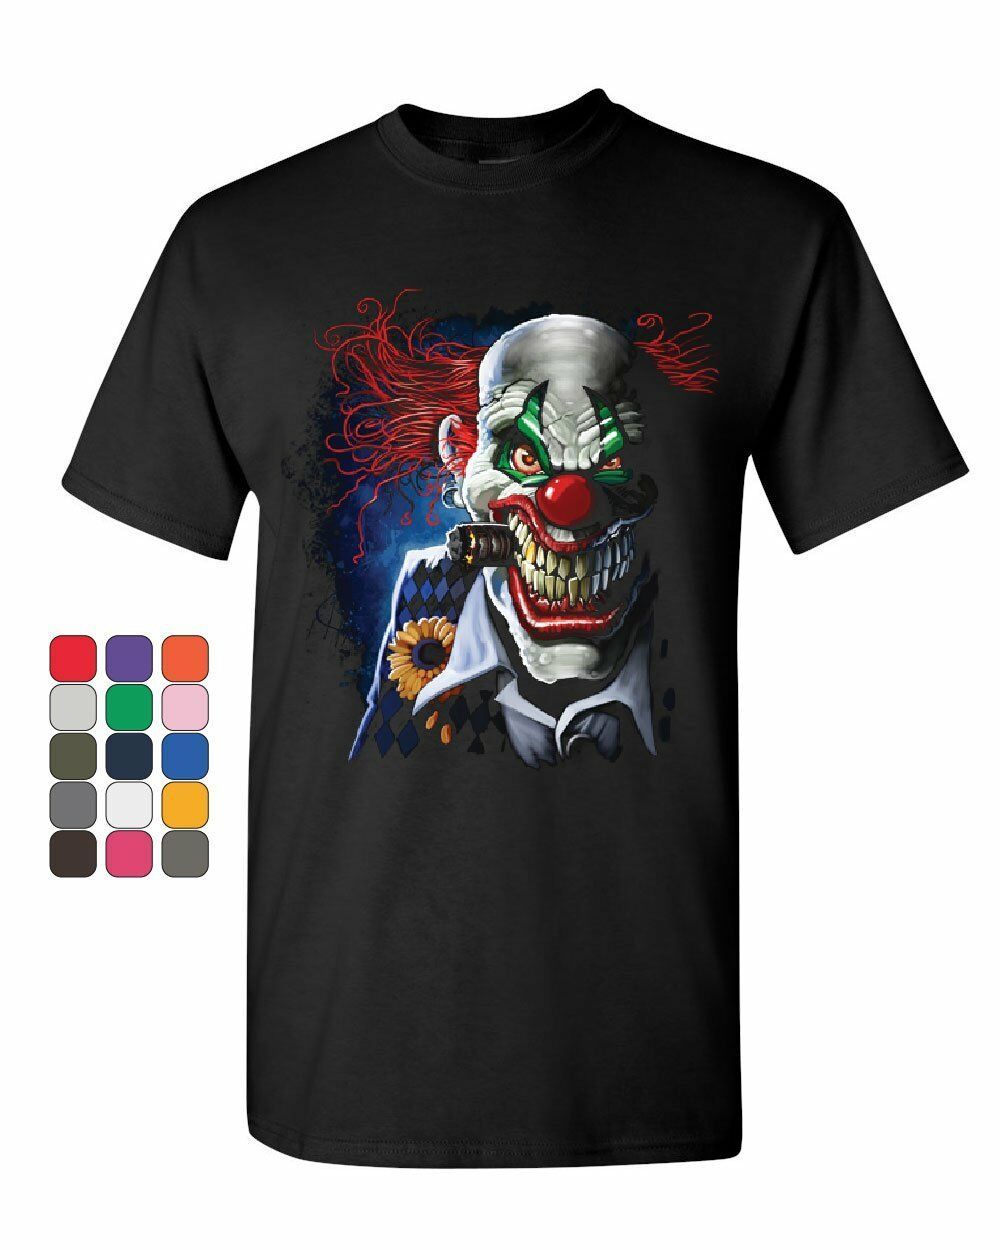 Creepy Joker Clown T-Shirt Nightmare Scary Mean Killer Halloween Mens Tee Shirt